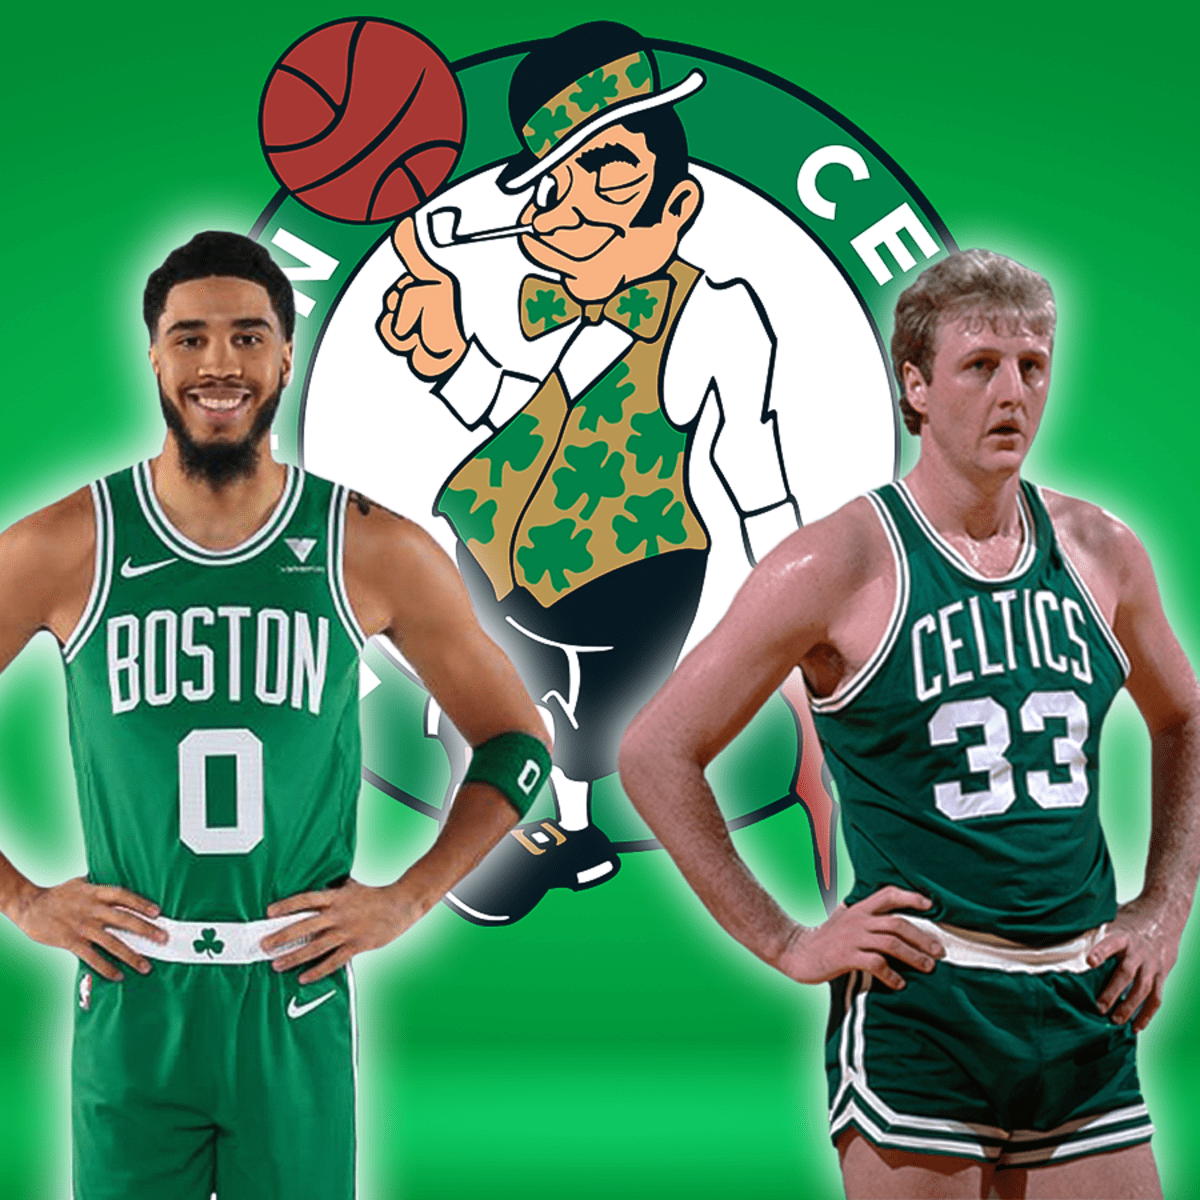 Boston Celtics Jayson Tatum And Larry Bird Legends Never Die